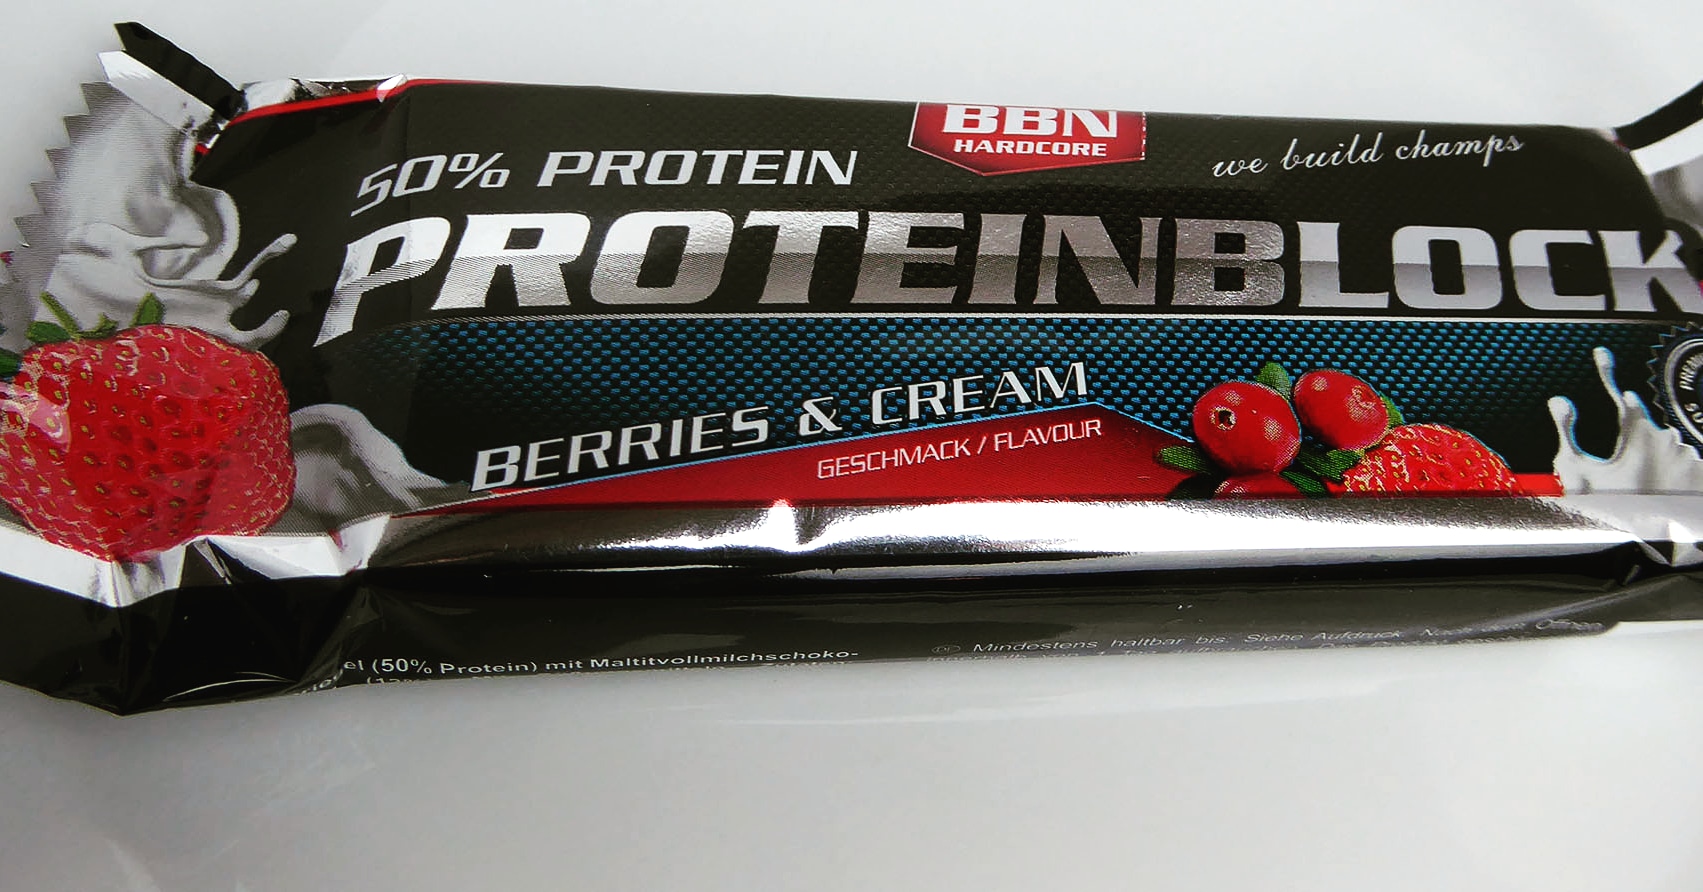 BBN Hardcore Proteinblock Berries Cream protein bar